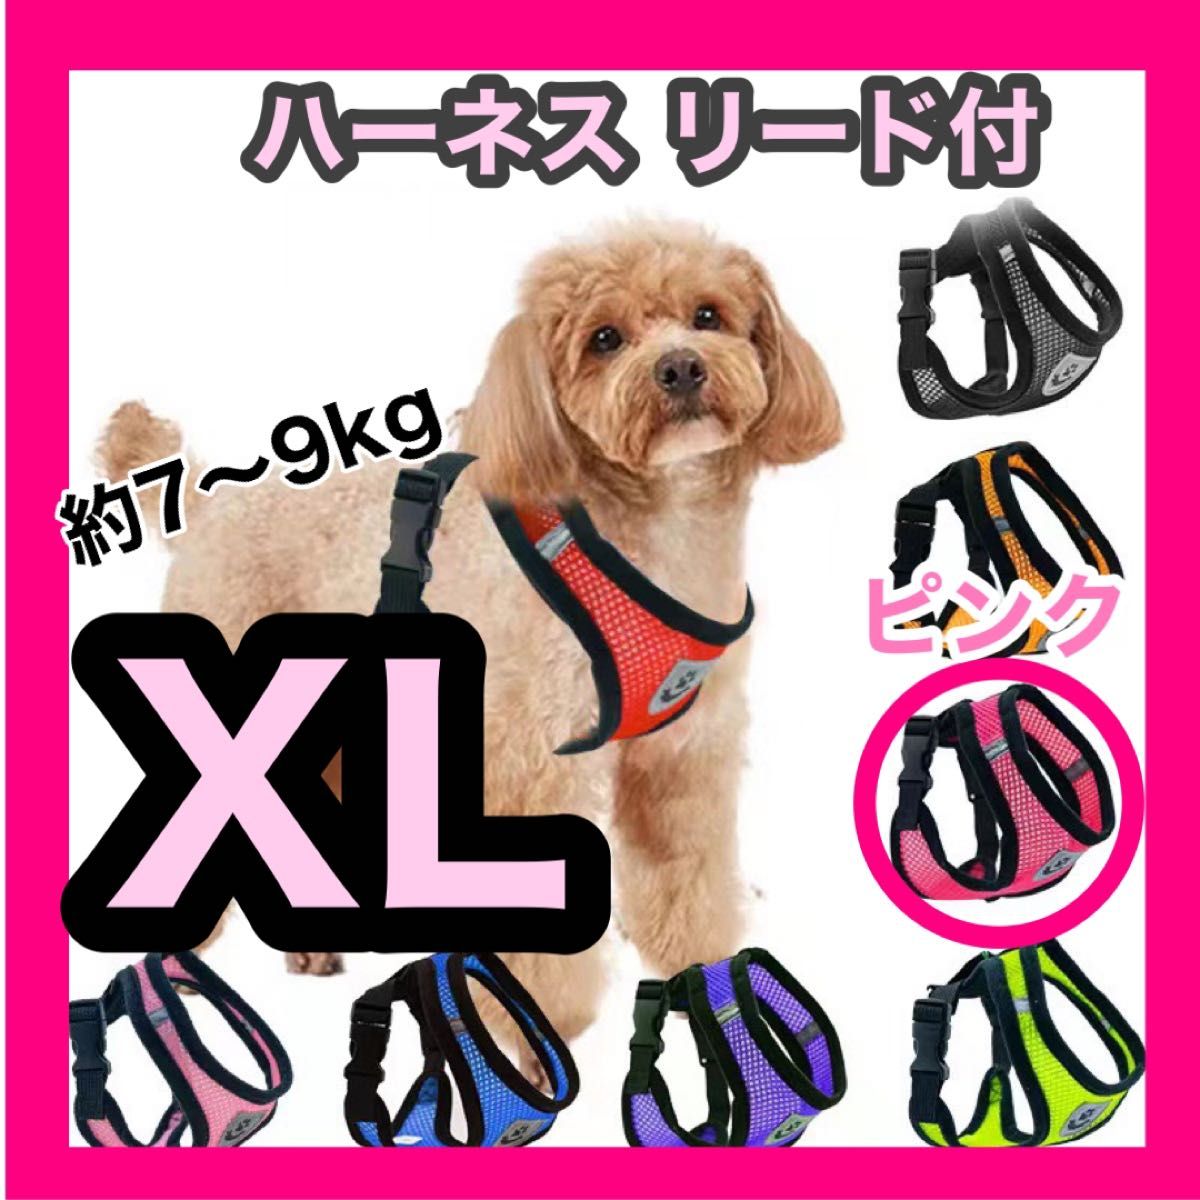 XL ピンク リード付き ハーネス 散歩 首輪 胴輪 ペット メッシュ 犬猫兼用 ペット用品